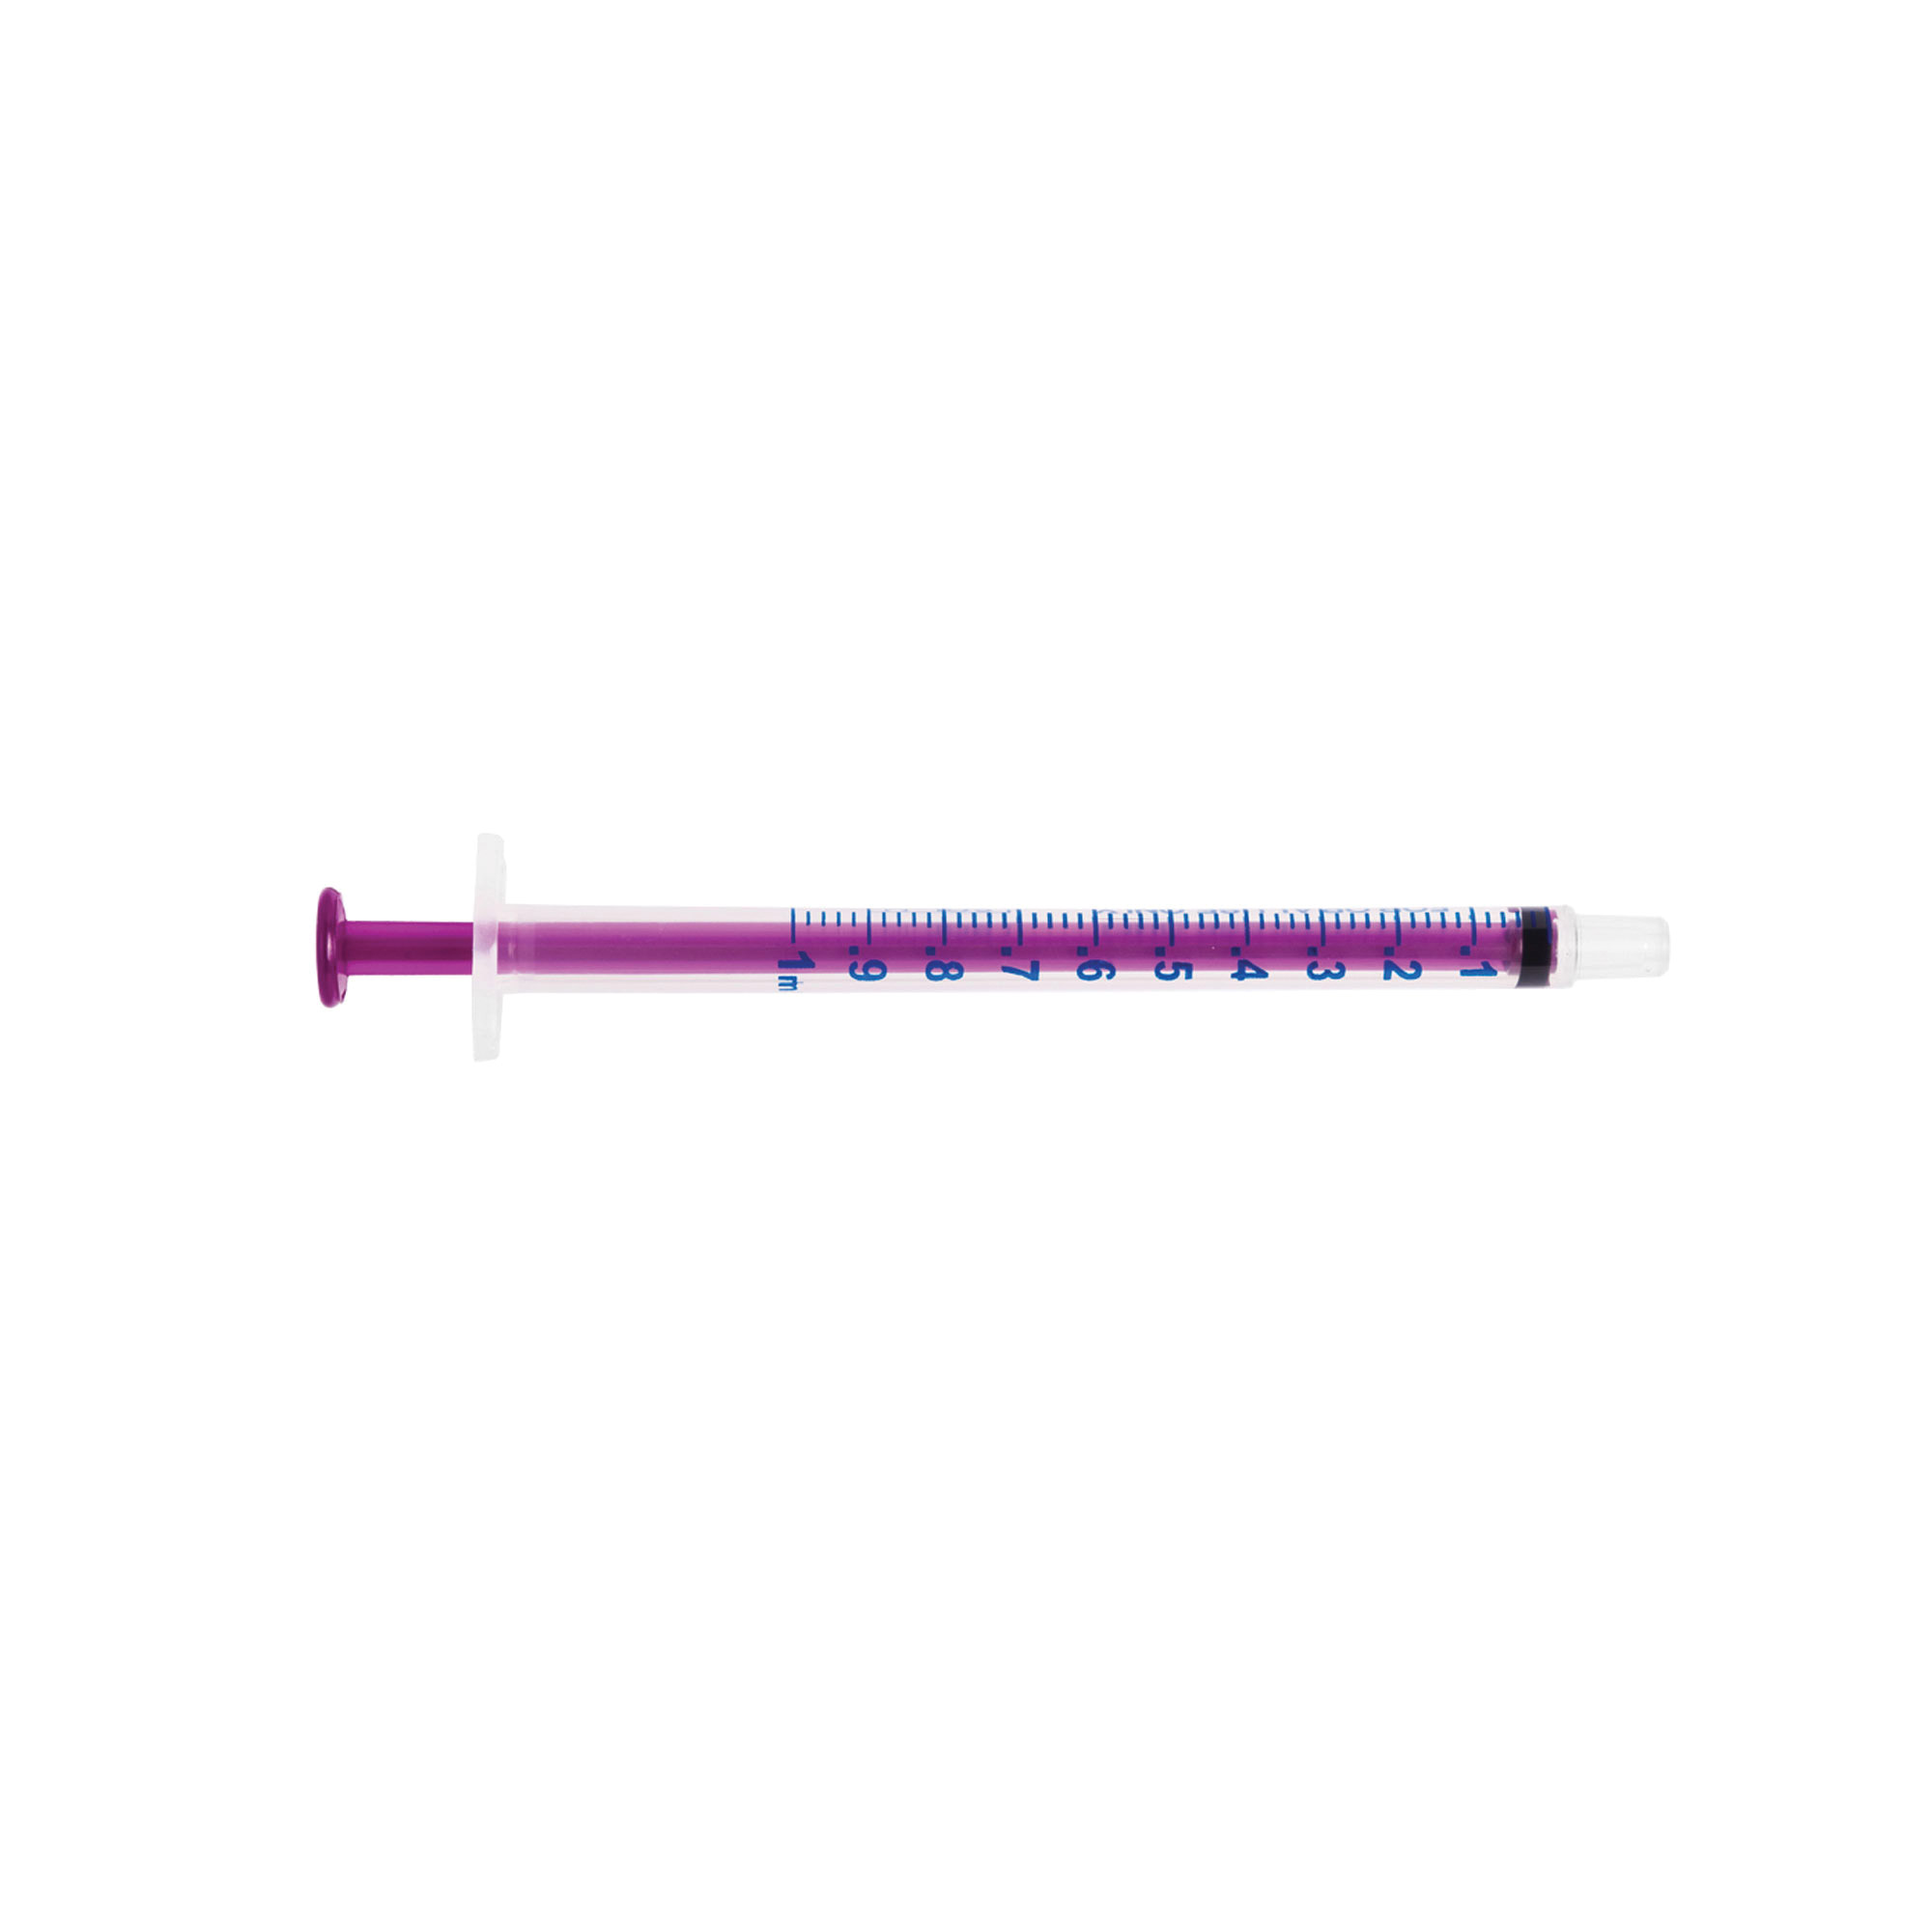 SOL - M Oral syringe (purple plunger) 20ml - Pack of 50